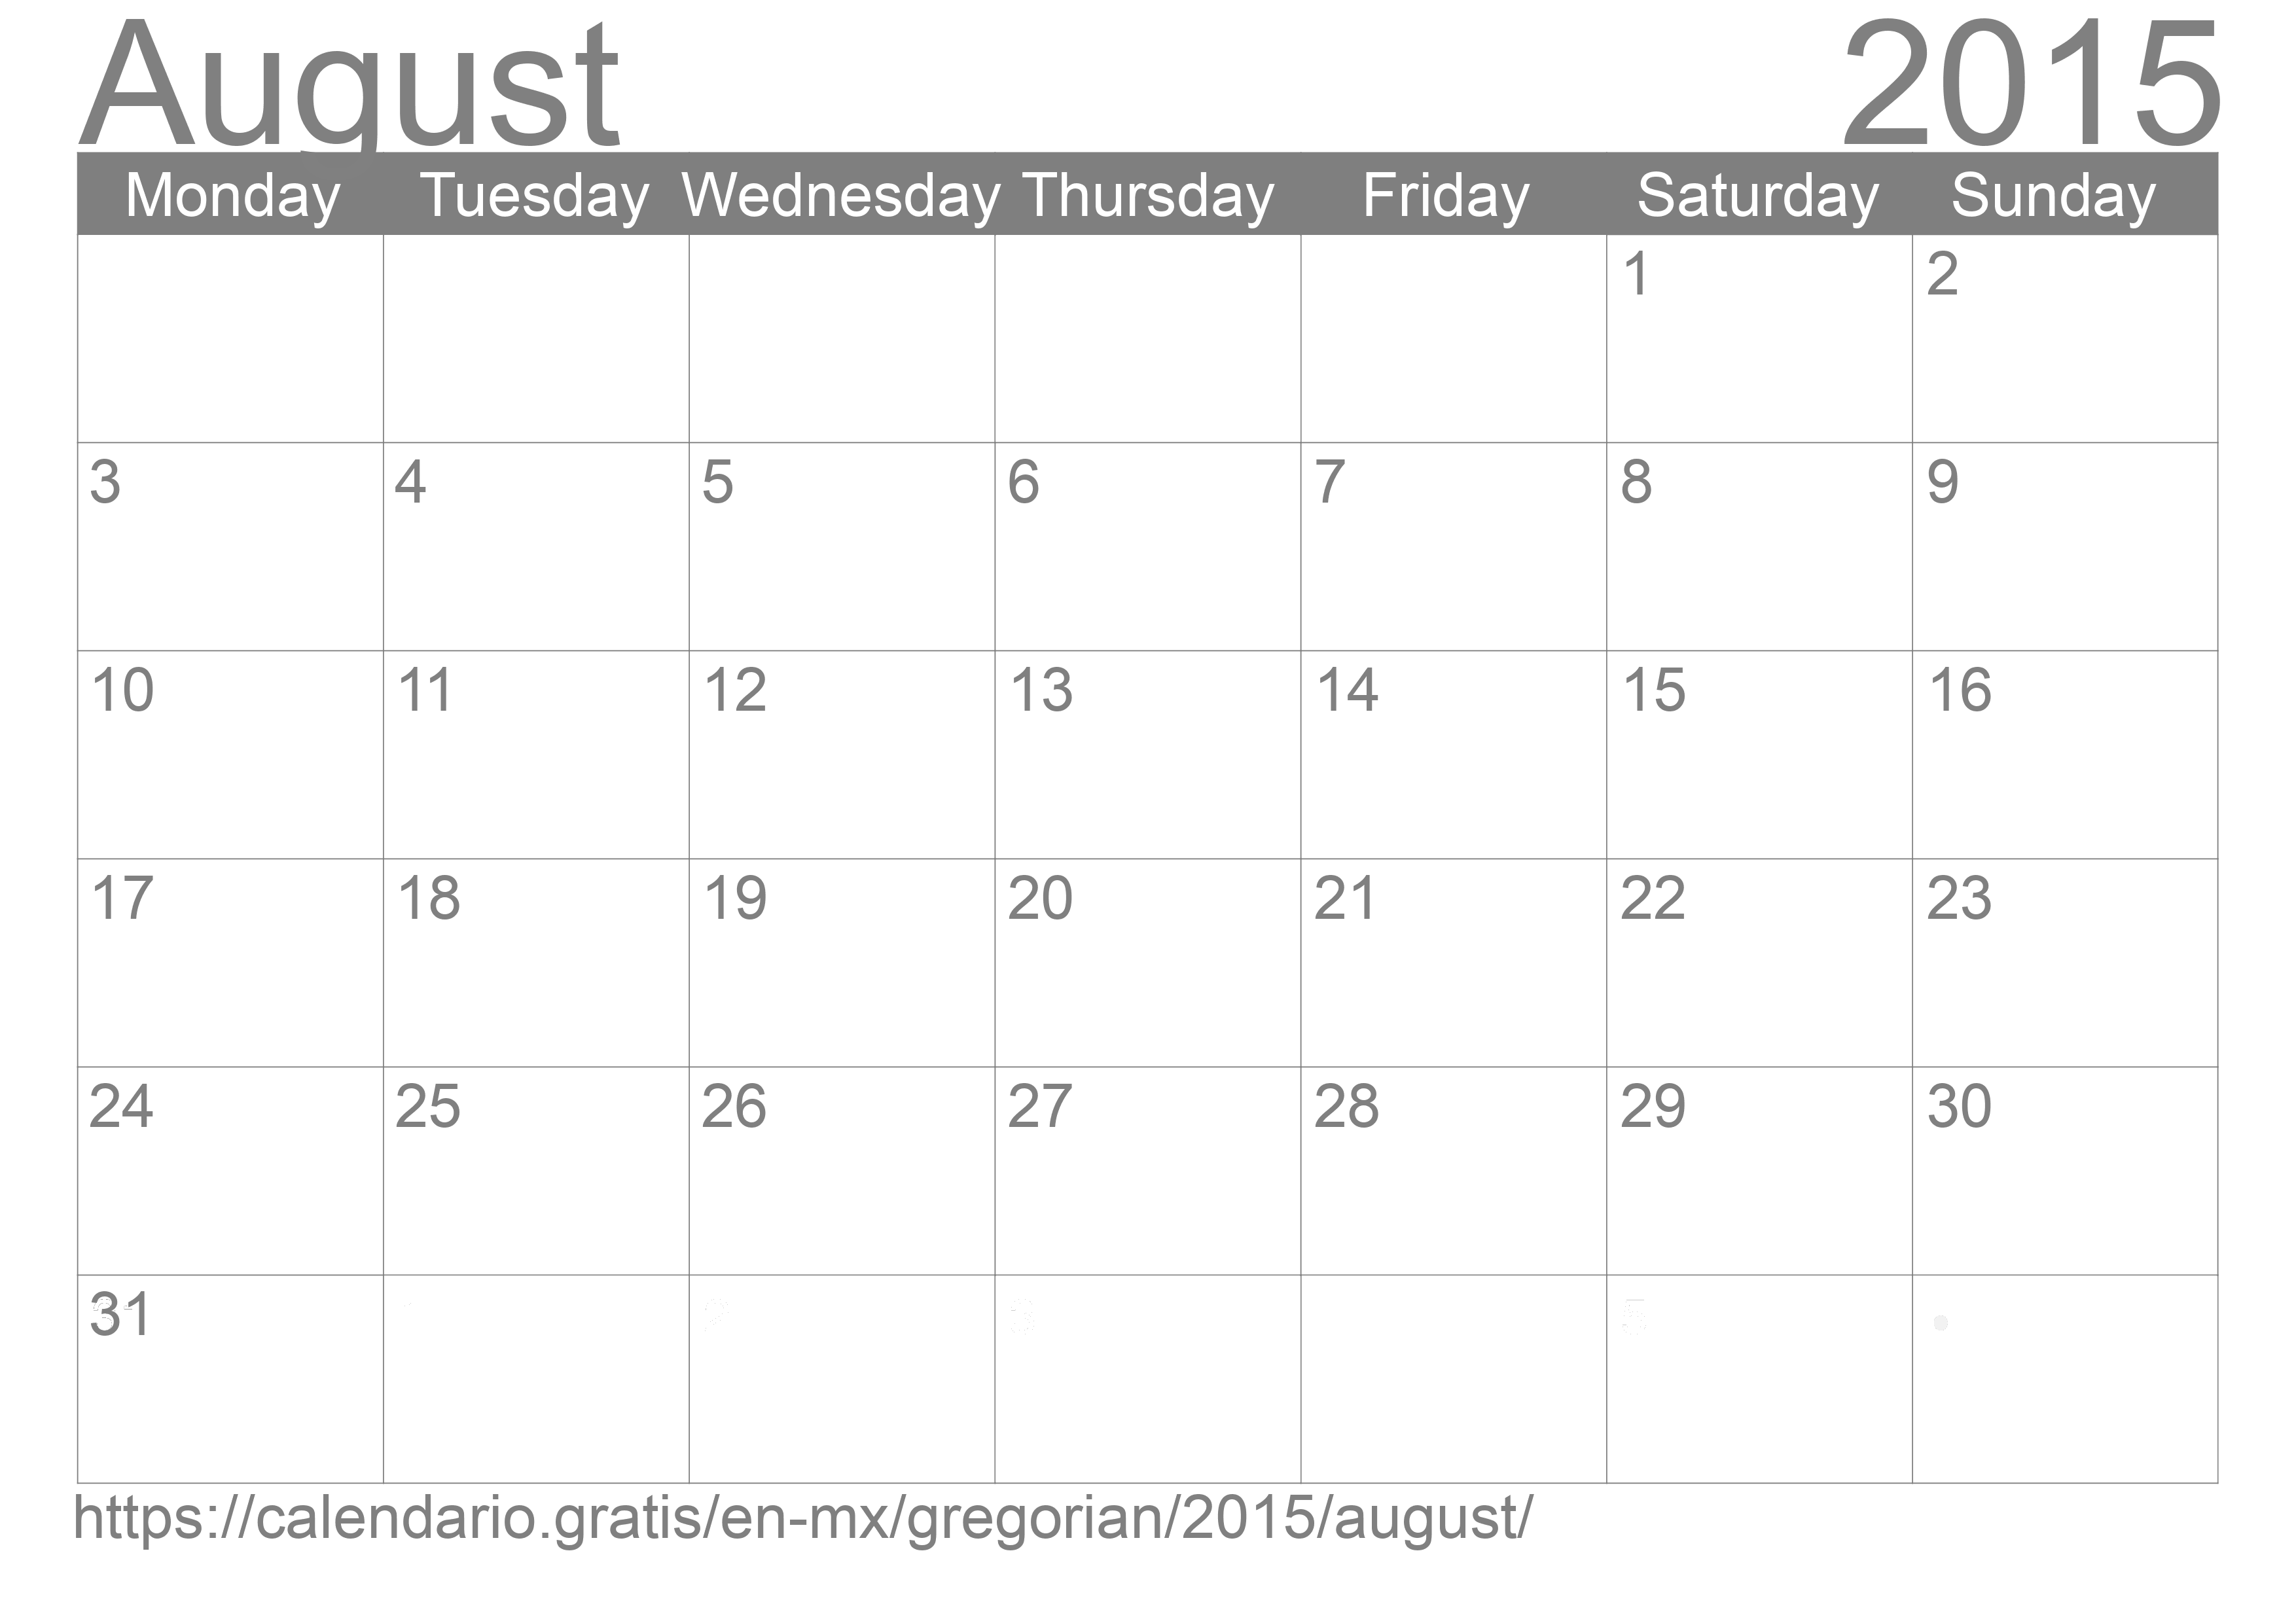 Calendar August 2015 to print